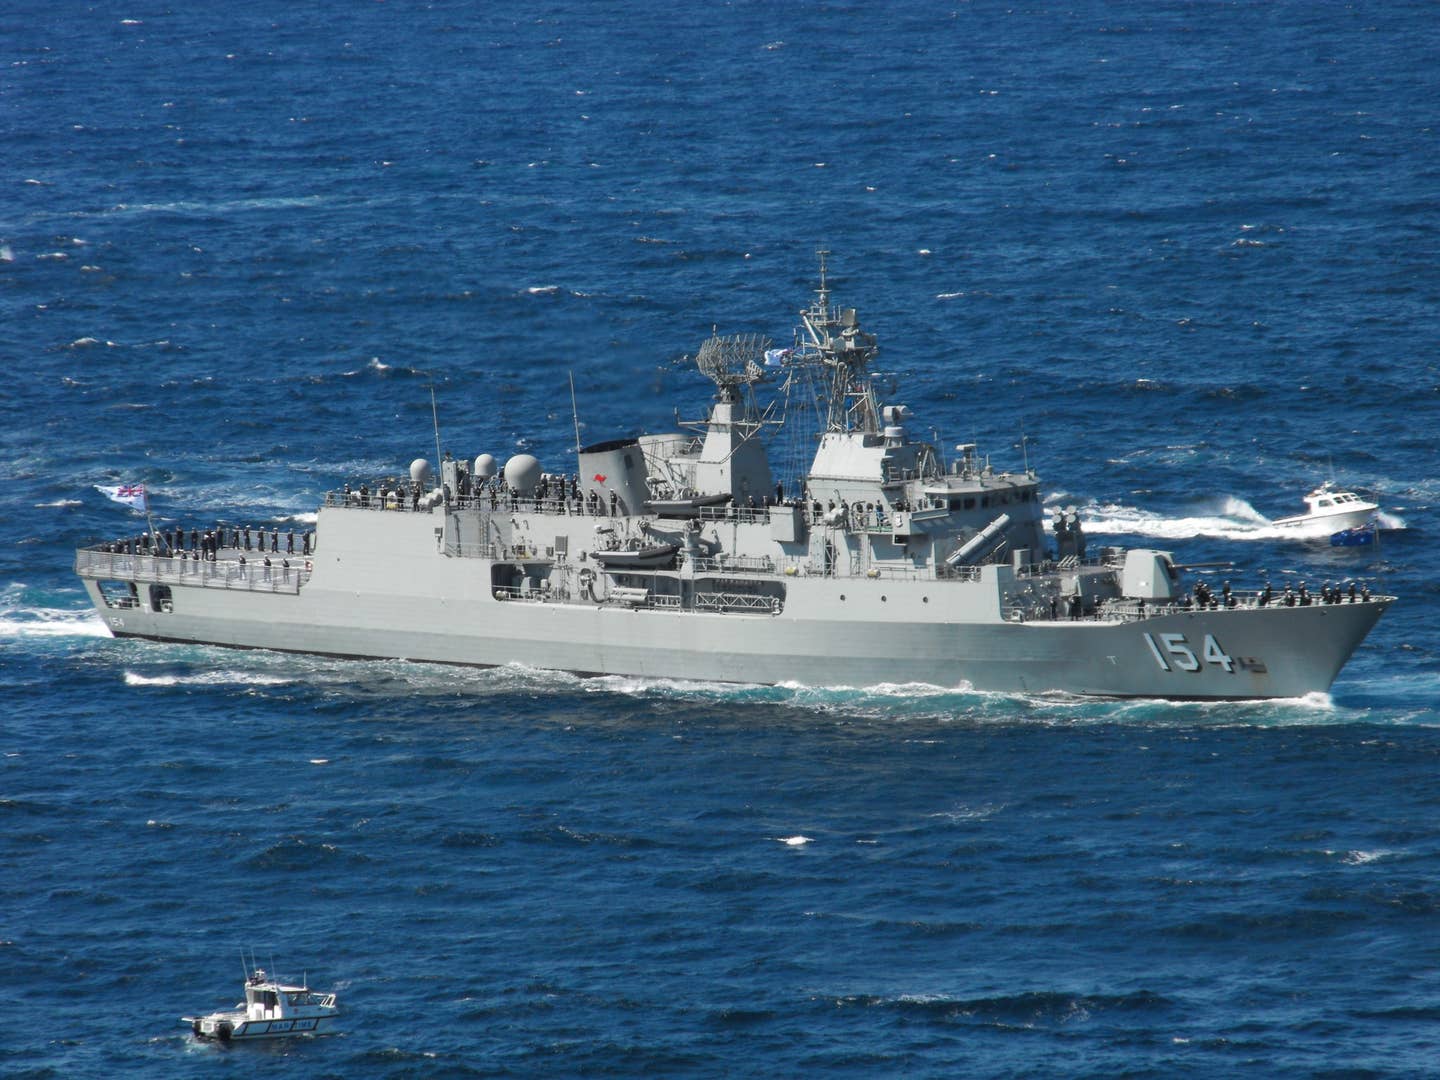 HMAS Parramatta, an Anzac class MEKO 200 type frigate of the Royal Australian Navy. (Wikimedia Commons photo by Saberwyn)